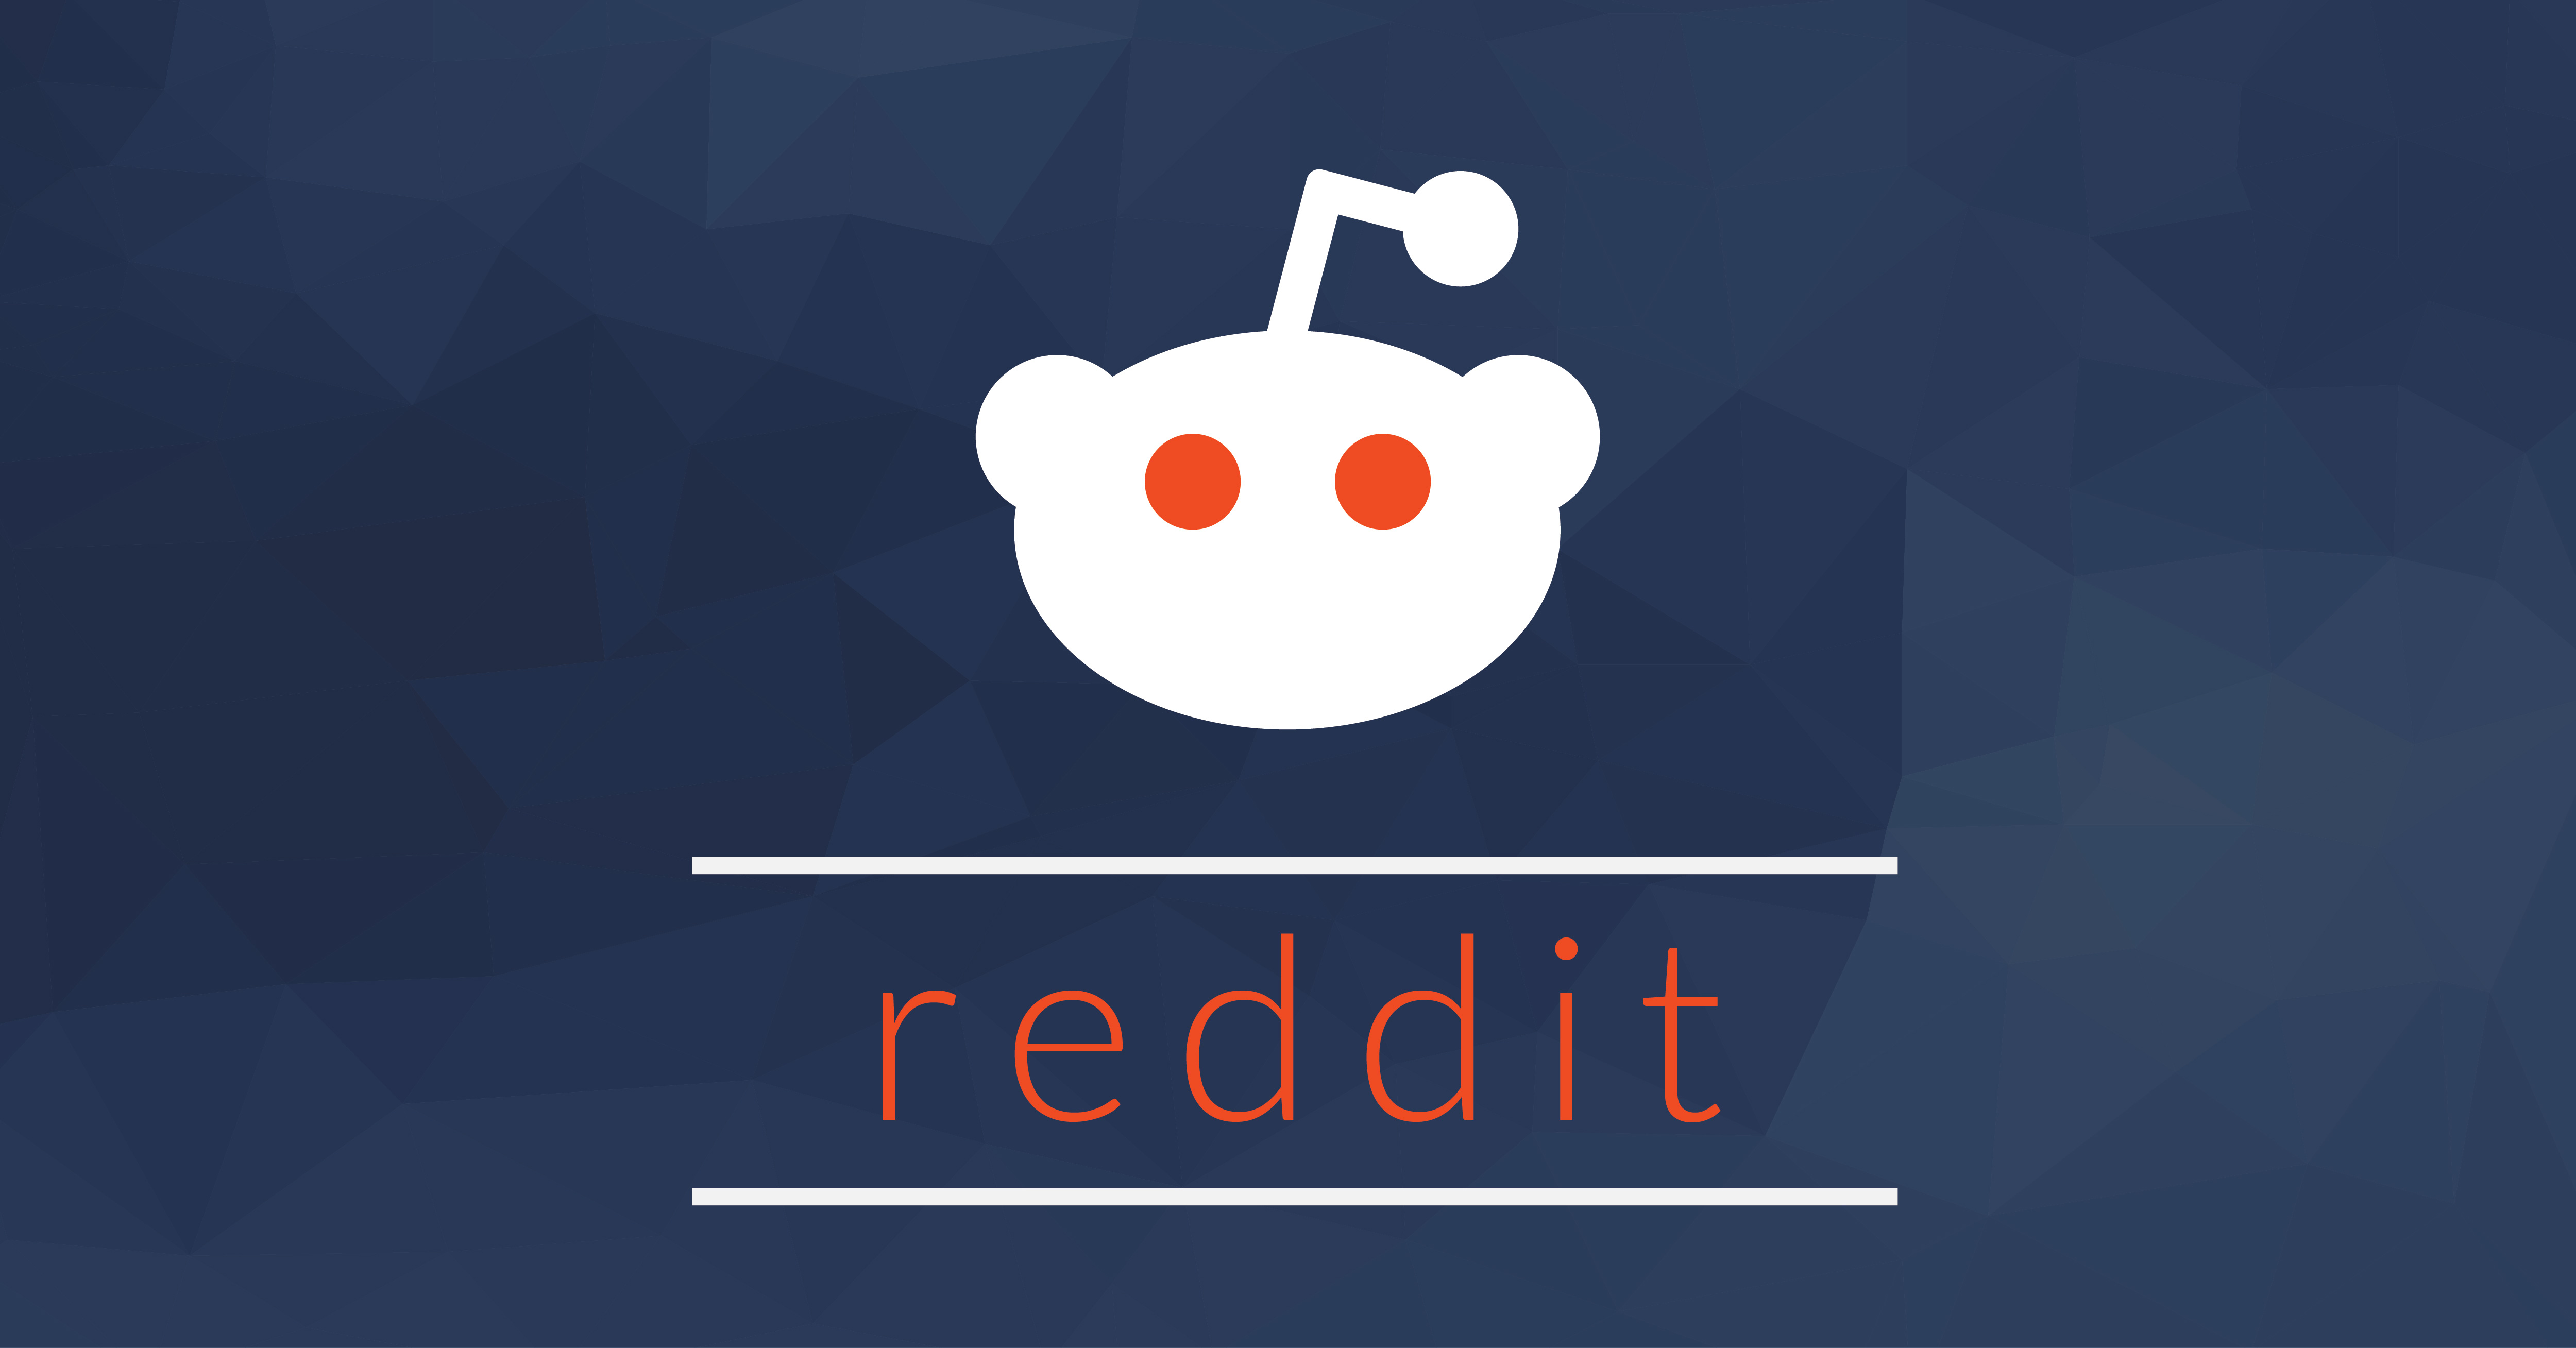 Reddit Abstract Logo Wallpaper, HD Brands 4K Wallpapers, Images, Photos